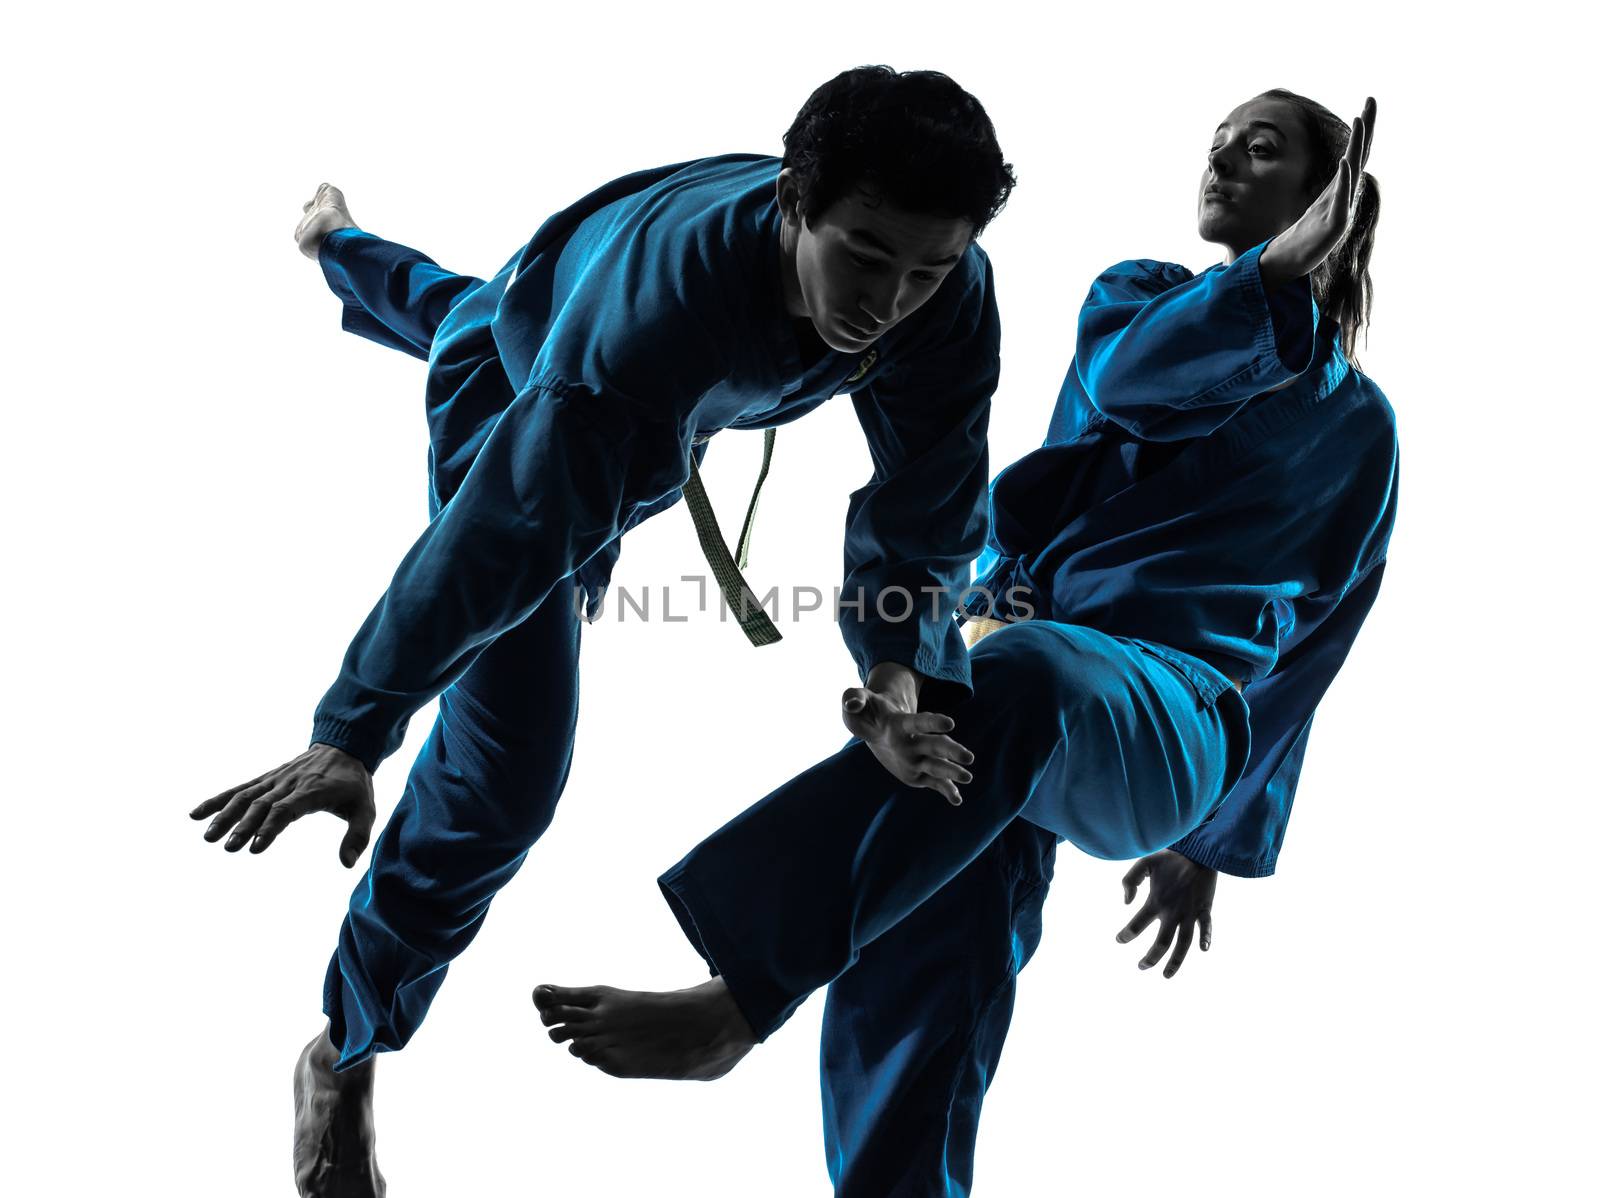 karate vietvodao martial arts man woman couple silhouette by PIXSTILL